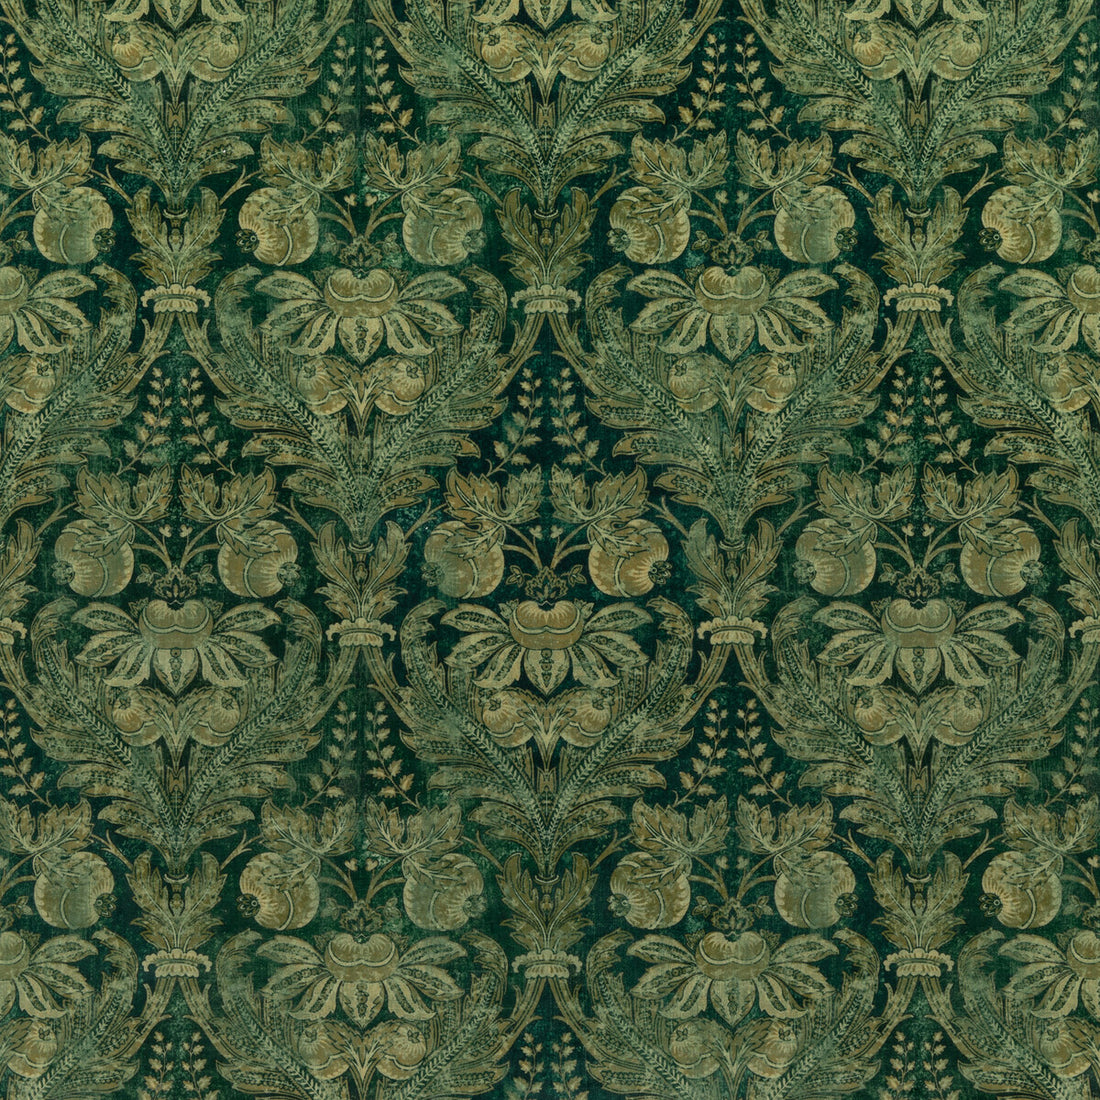 Lapura Velvet fabric in emerald color - pattern BP10829.3.0 - by G P &amp; J Baker in the Coromandel collection